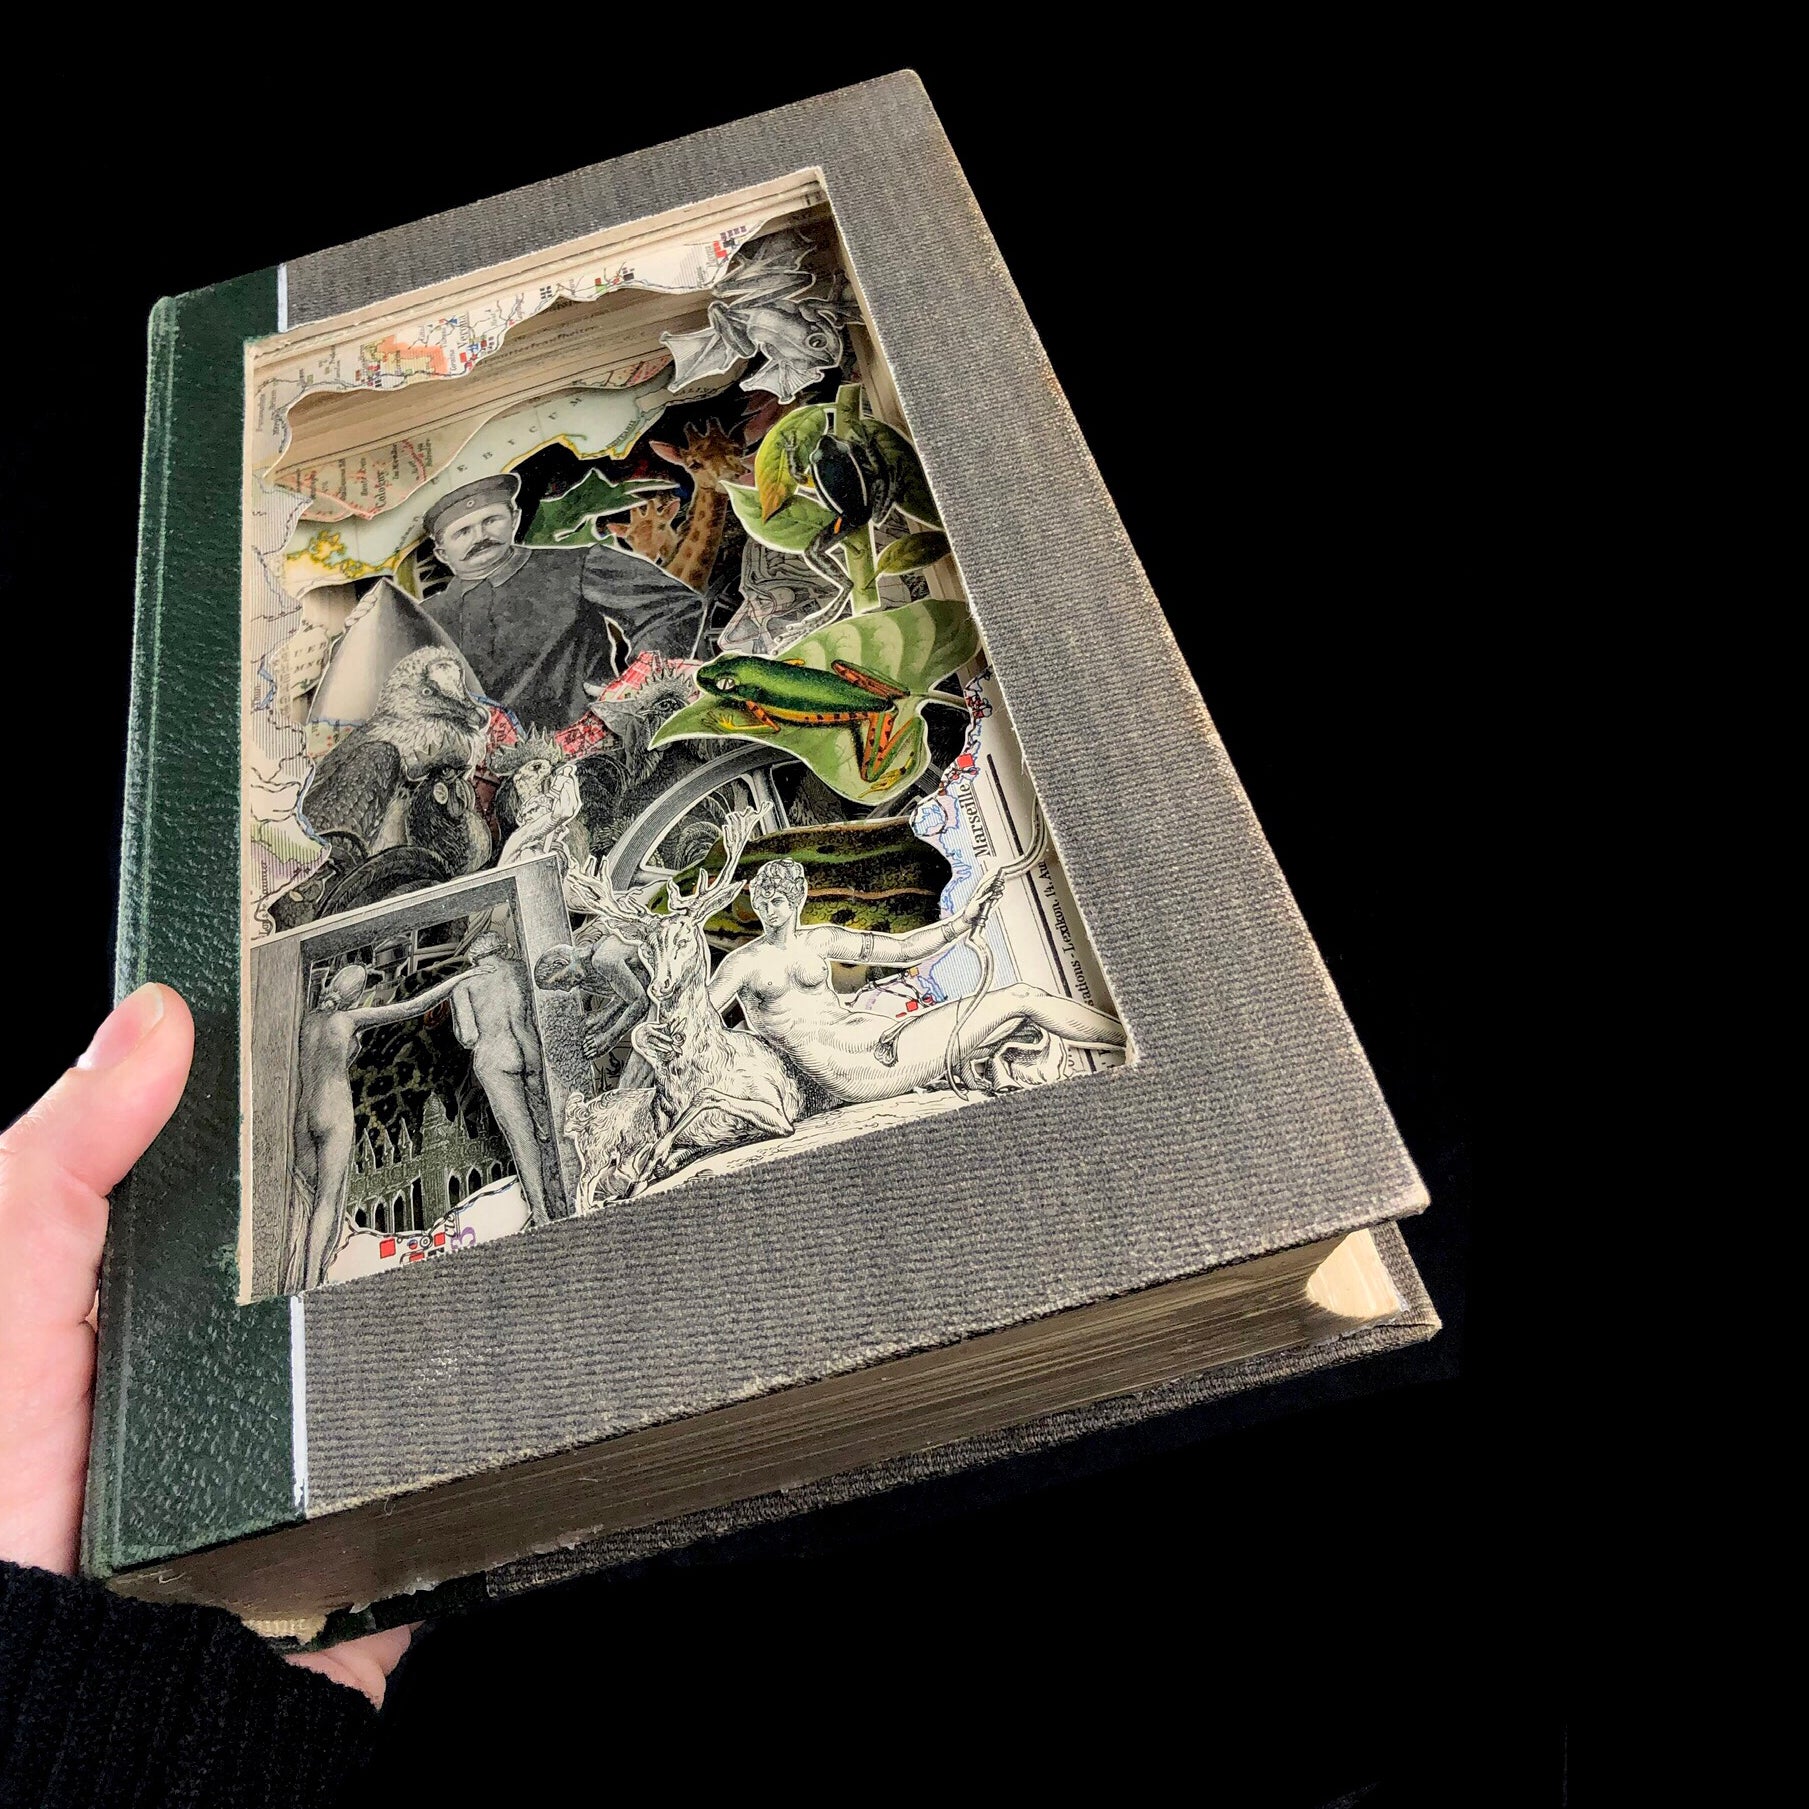 Brockhaus book shown held in hand